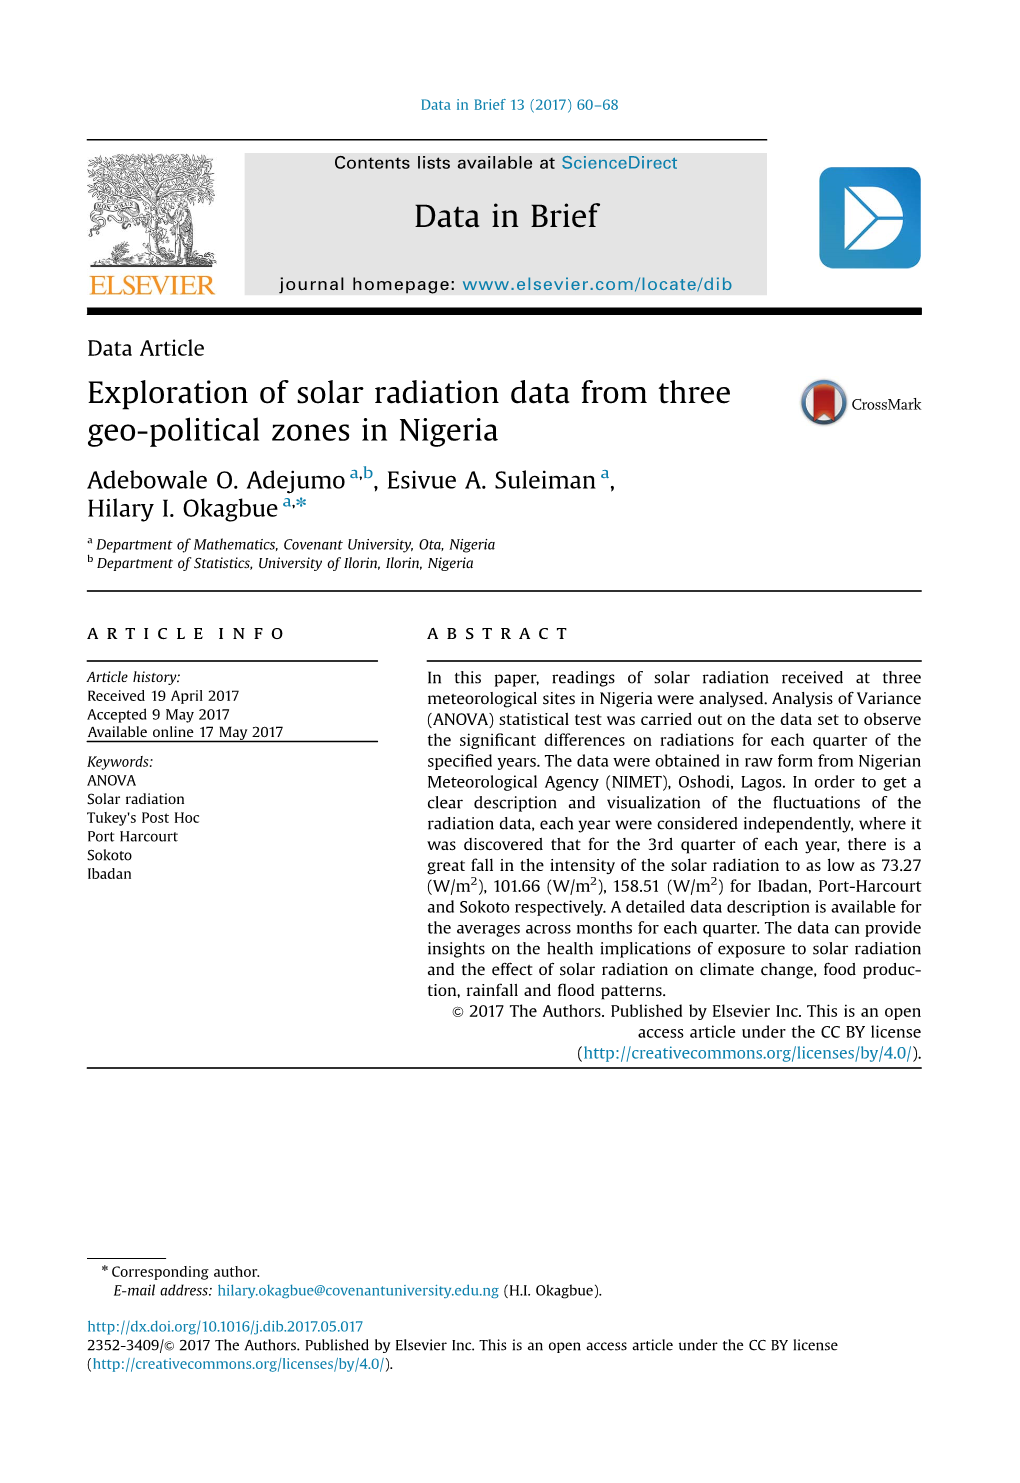 Exploration of Solar Radiation Data from Three Geo-Political Zones in Nigeria